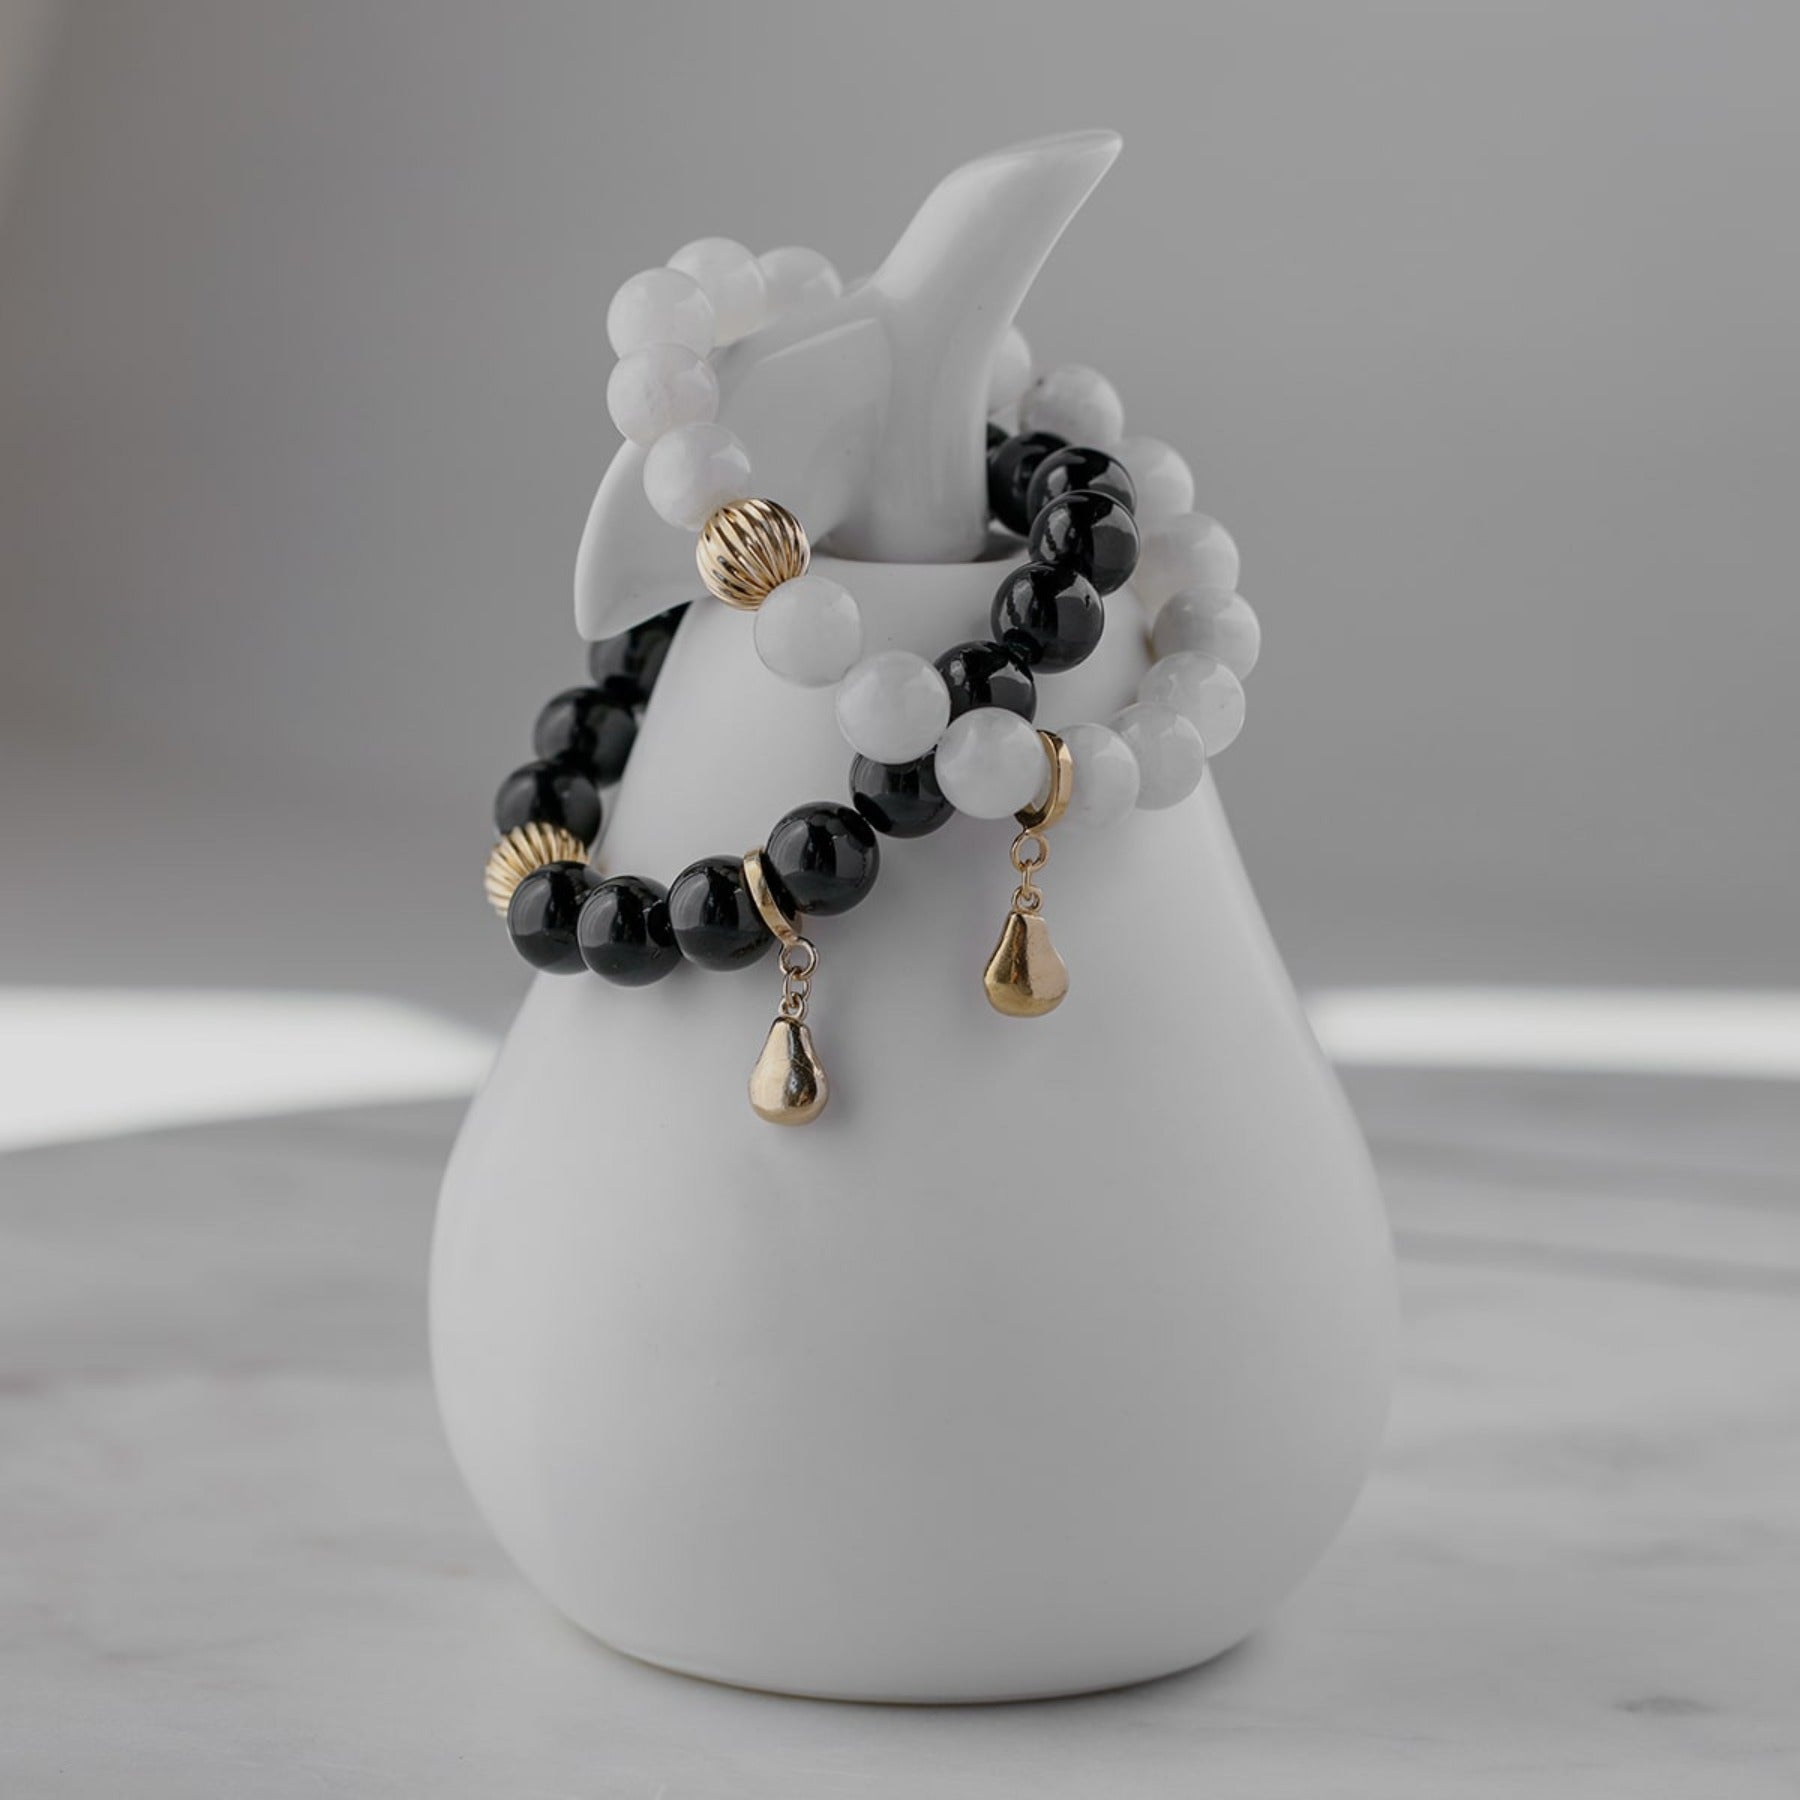 Black tourmaline crystal smooth gemstone elastic bracelet with 14k gold corrugated bead and pear charm.